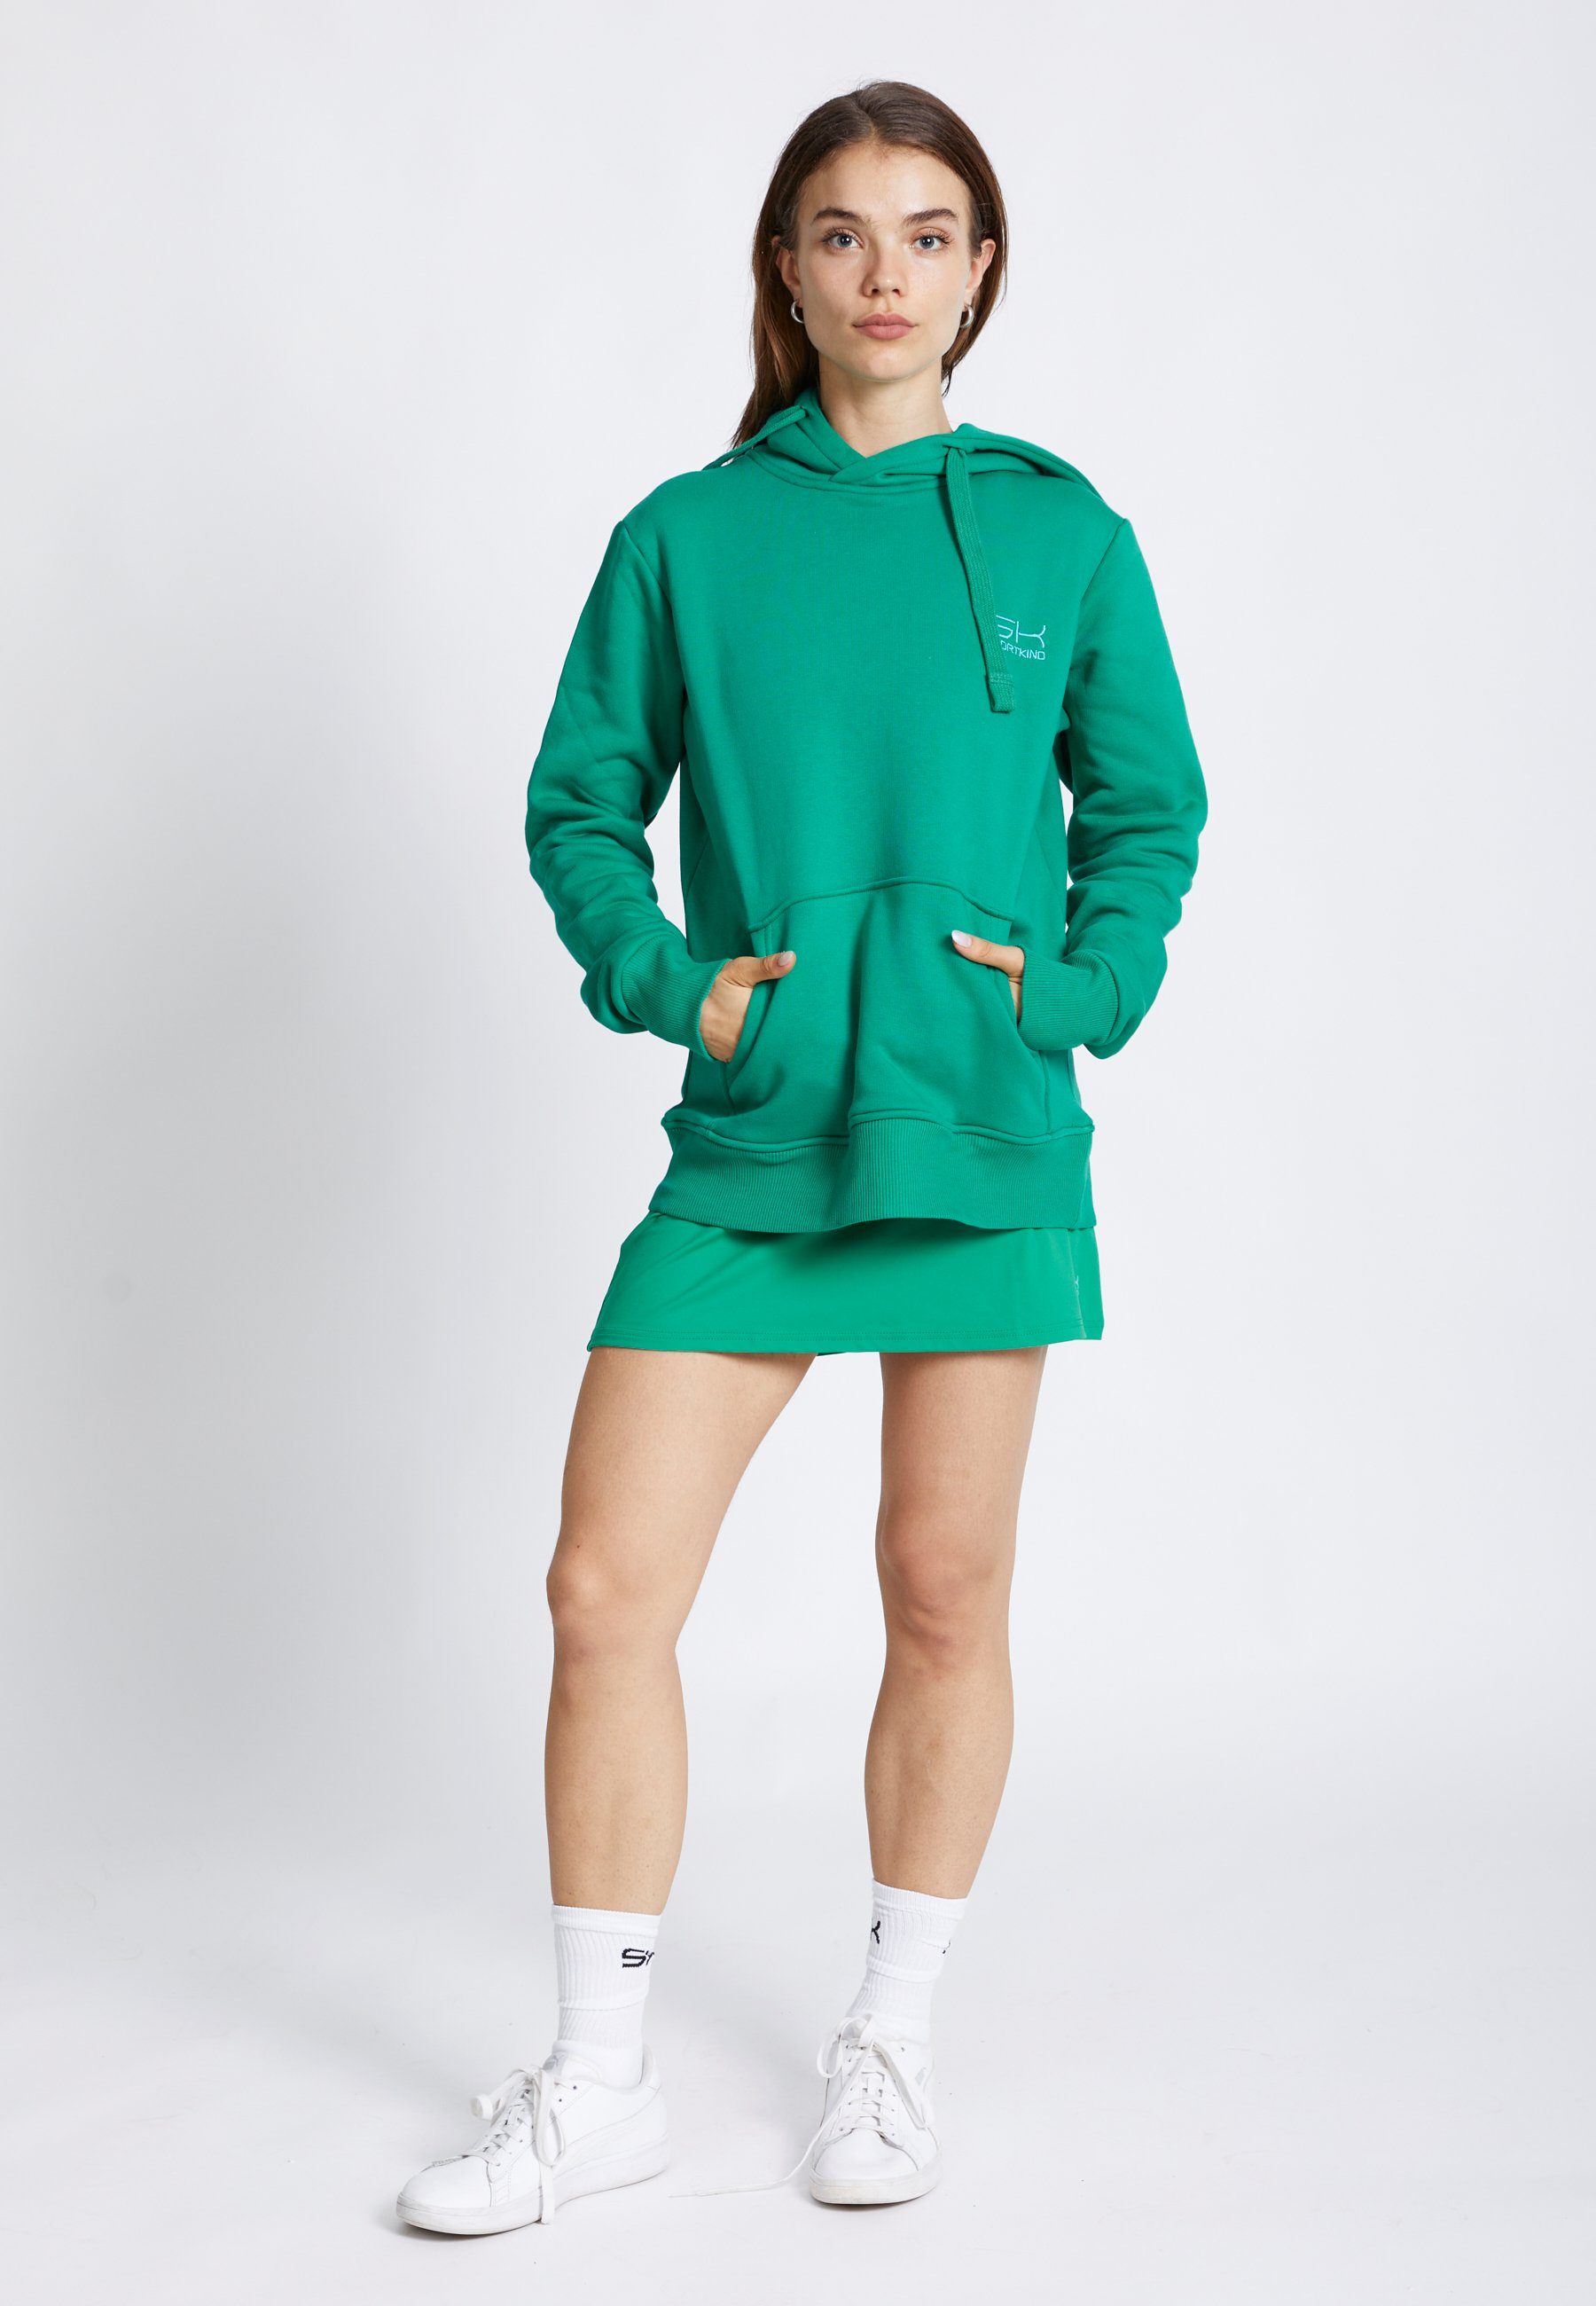 grün smaragd Kapuzensweater SPORTKIND unisex Hoodie